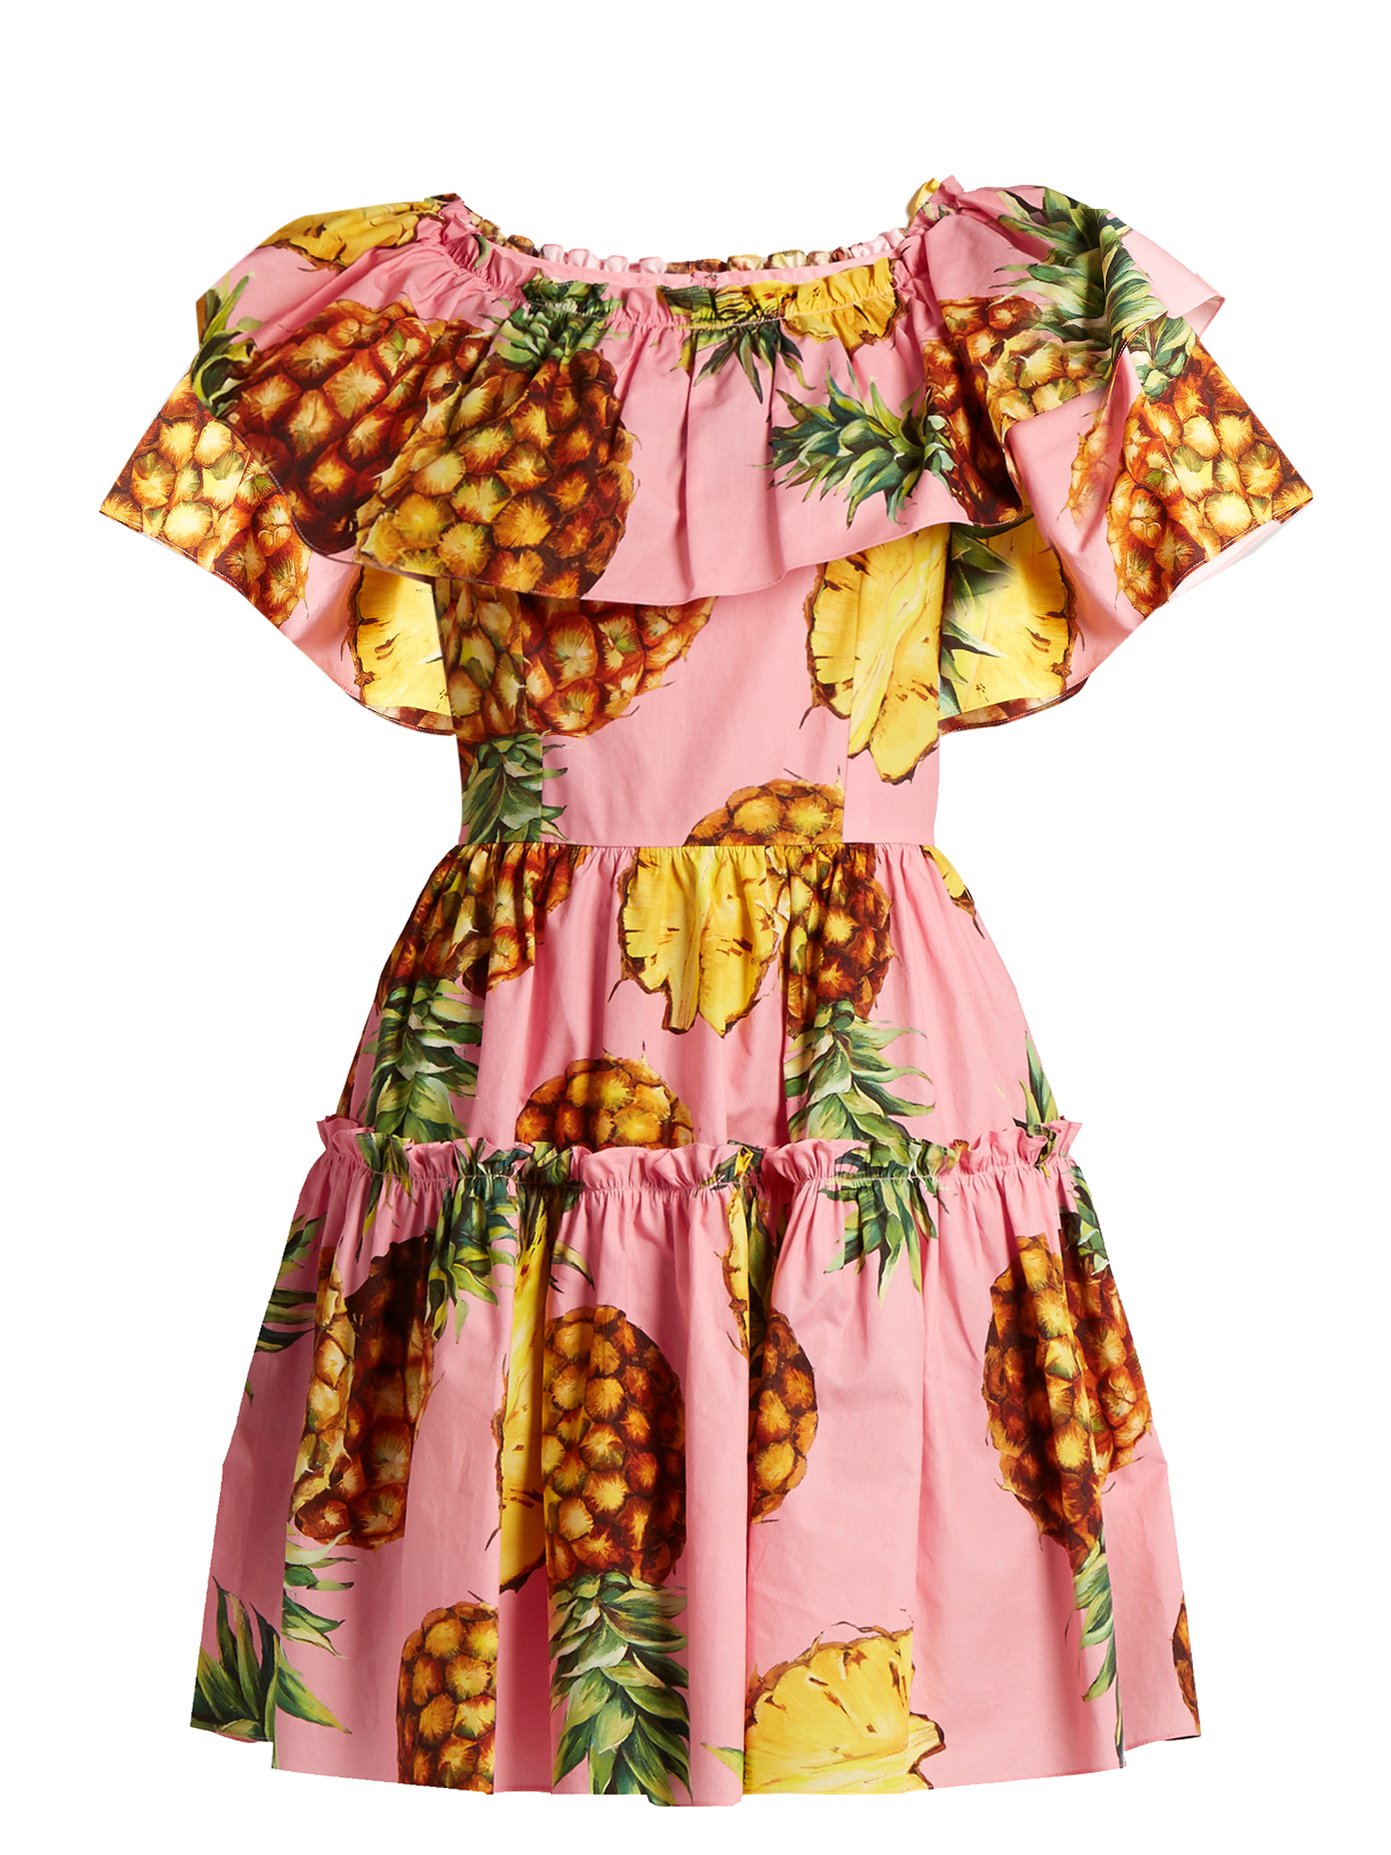 dolce gabbana pineapple dress